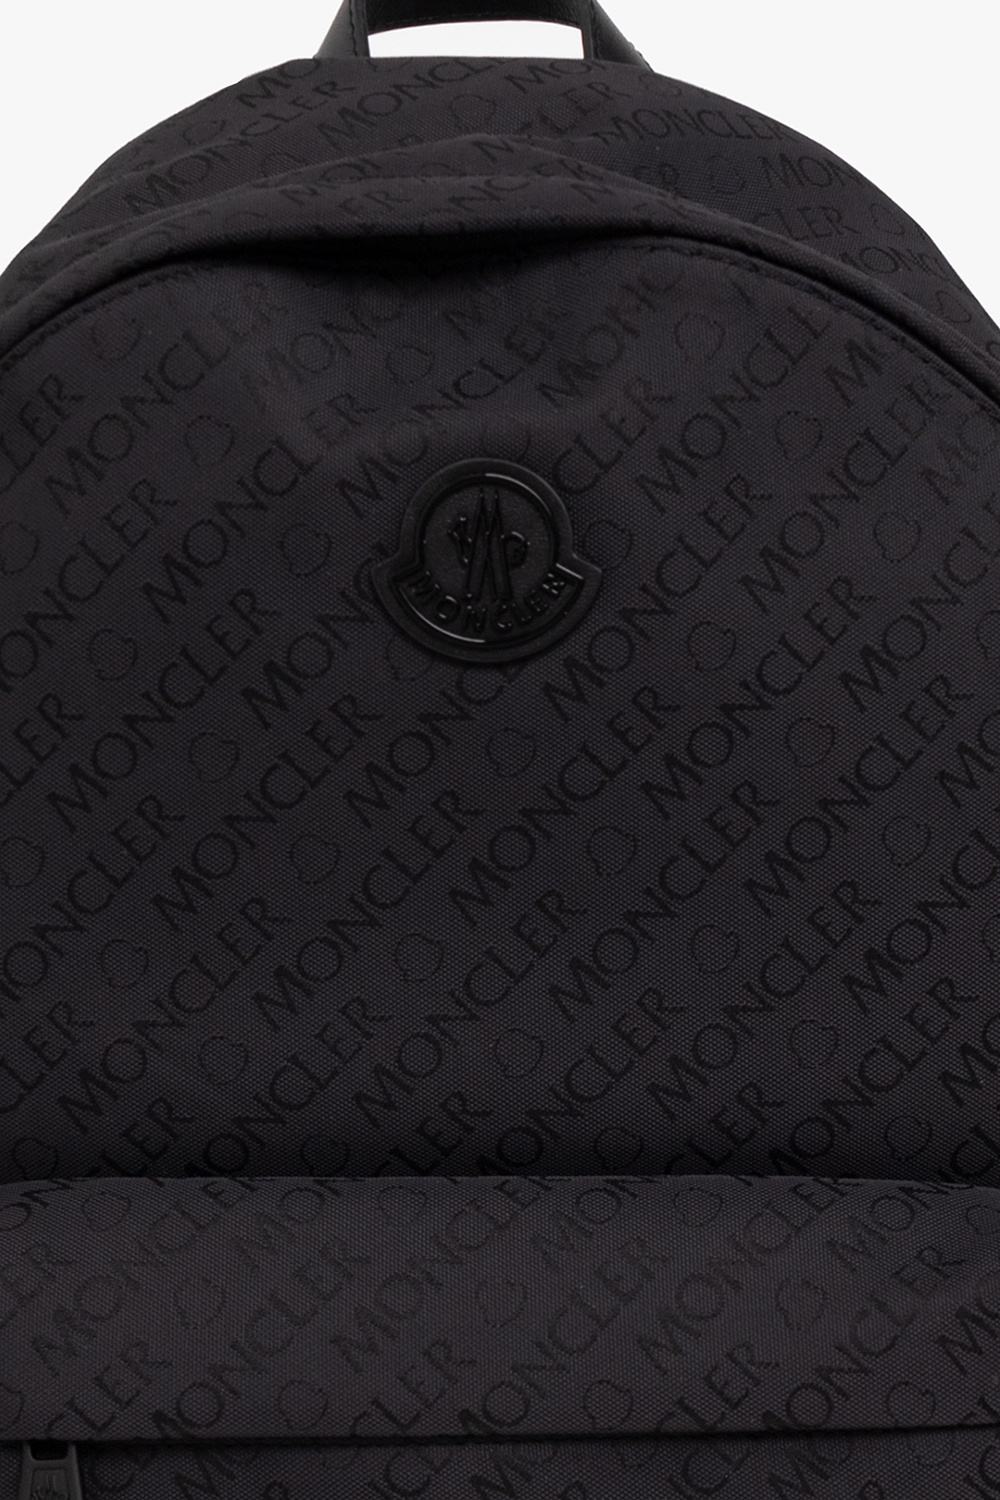 Moncler herschel supply co x nba los angeles clippers classic xl 600d bag black